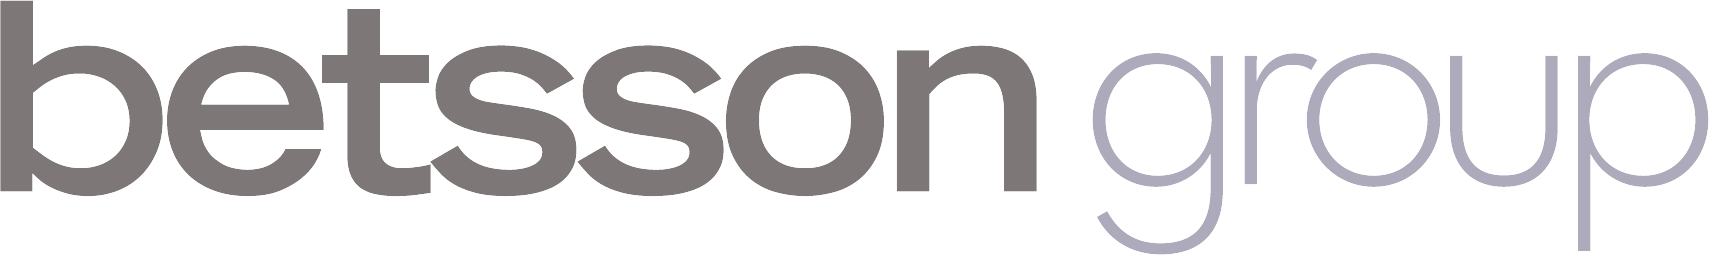 Betsson logo, one of OnAir's partners.